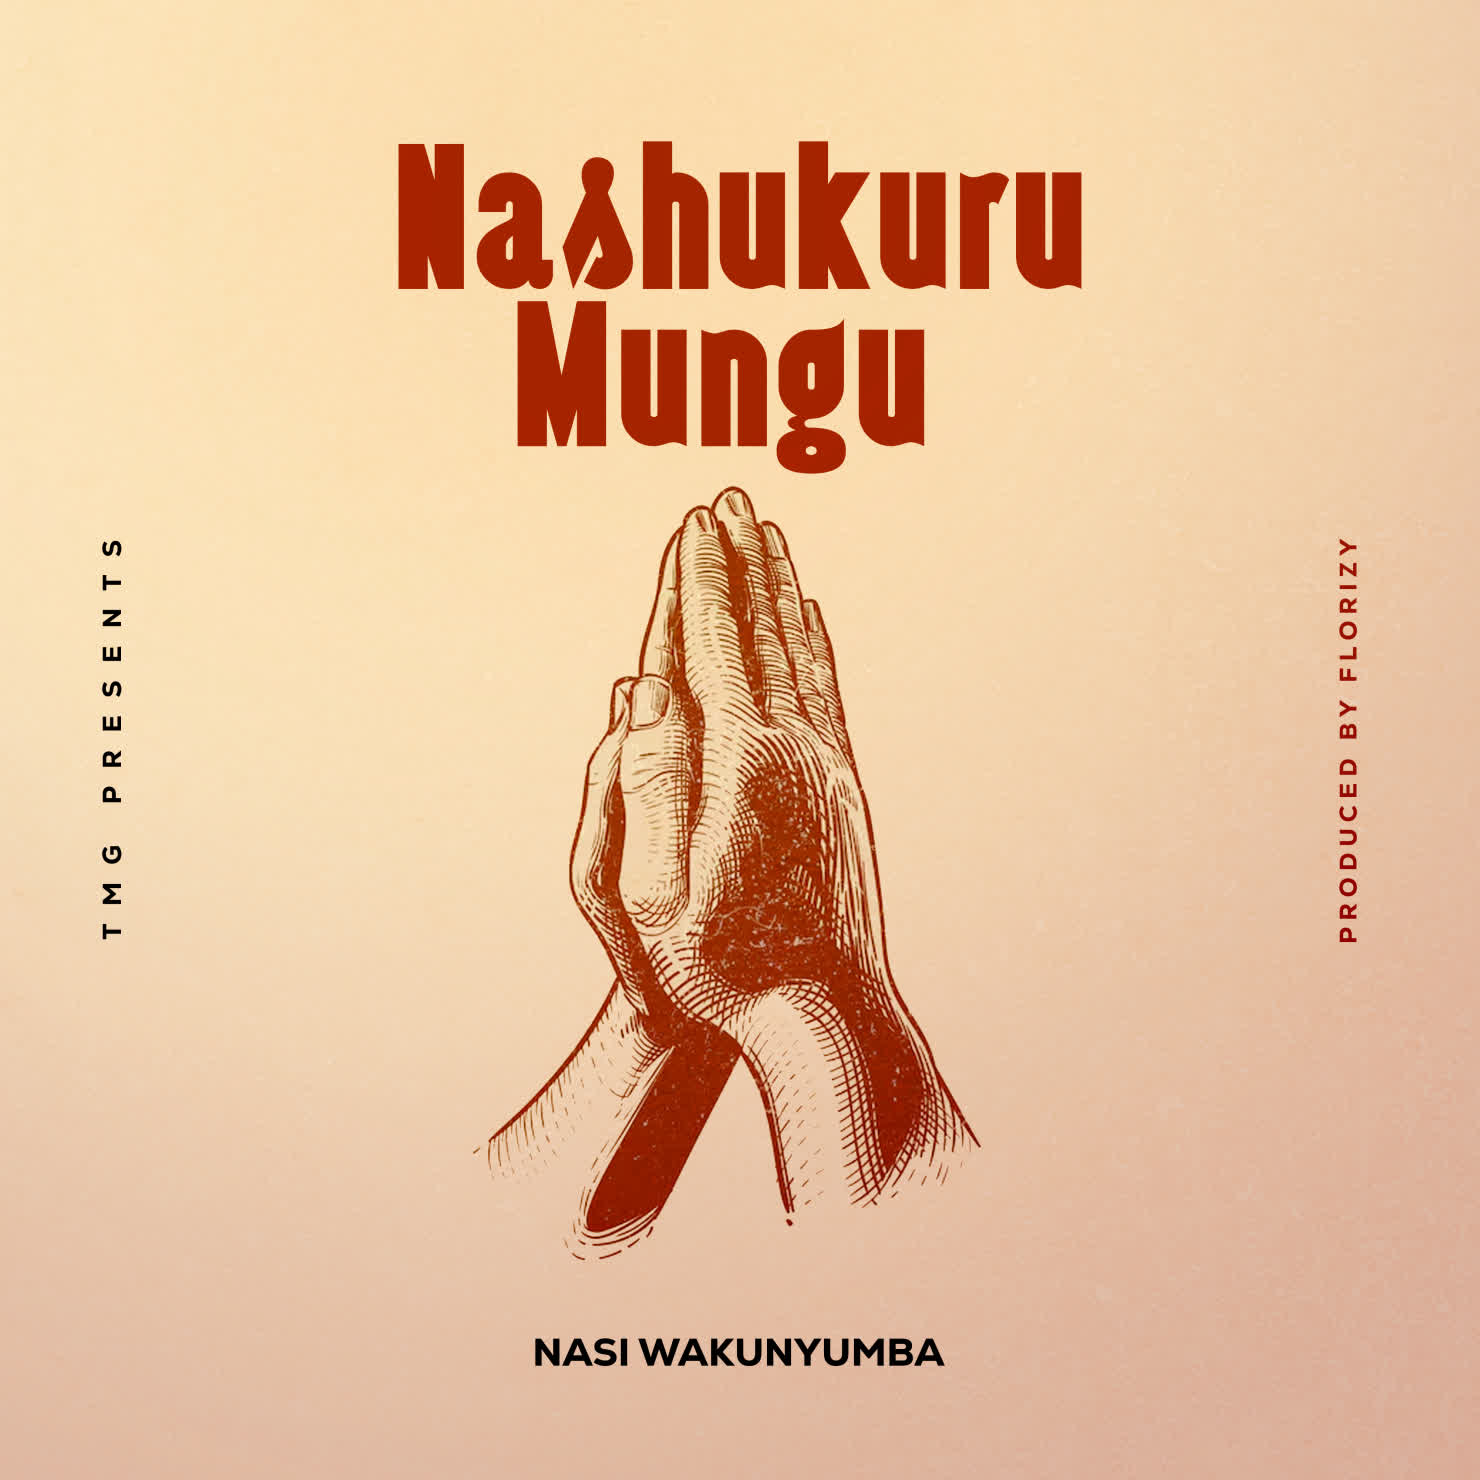 Audio |  Nasi Wakunyumba – Nashukuru Mungu | Download MP3